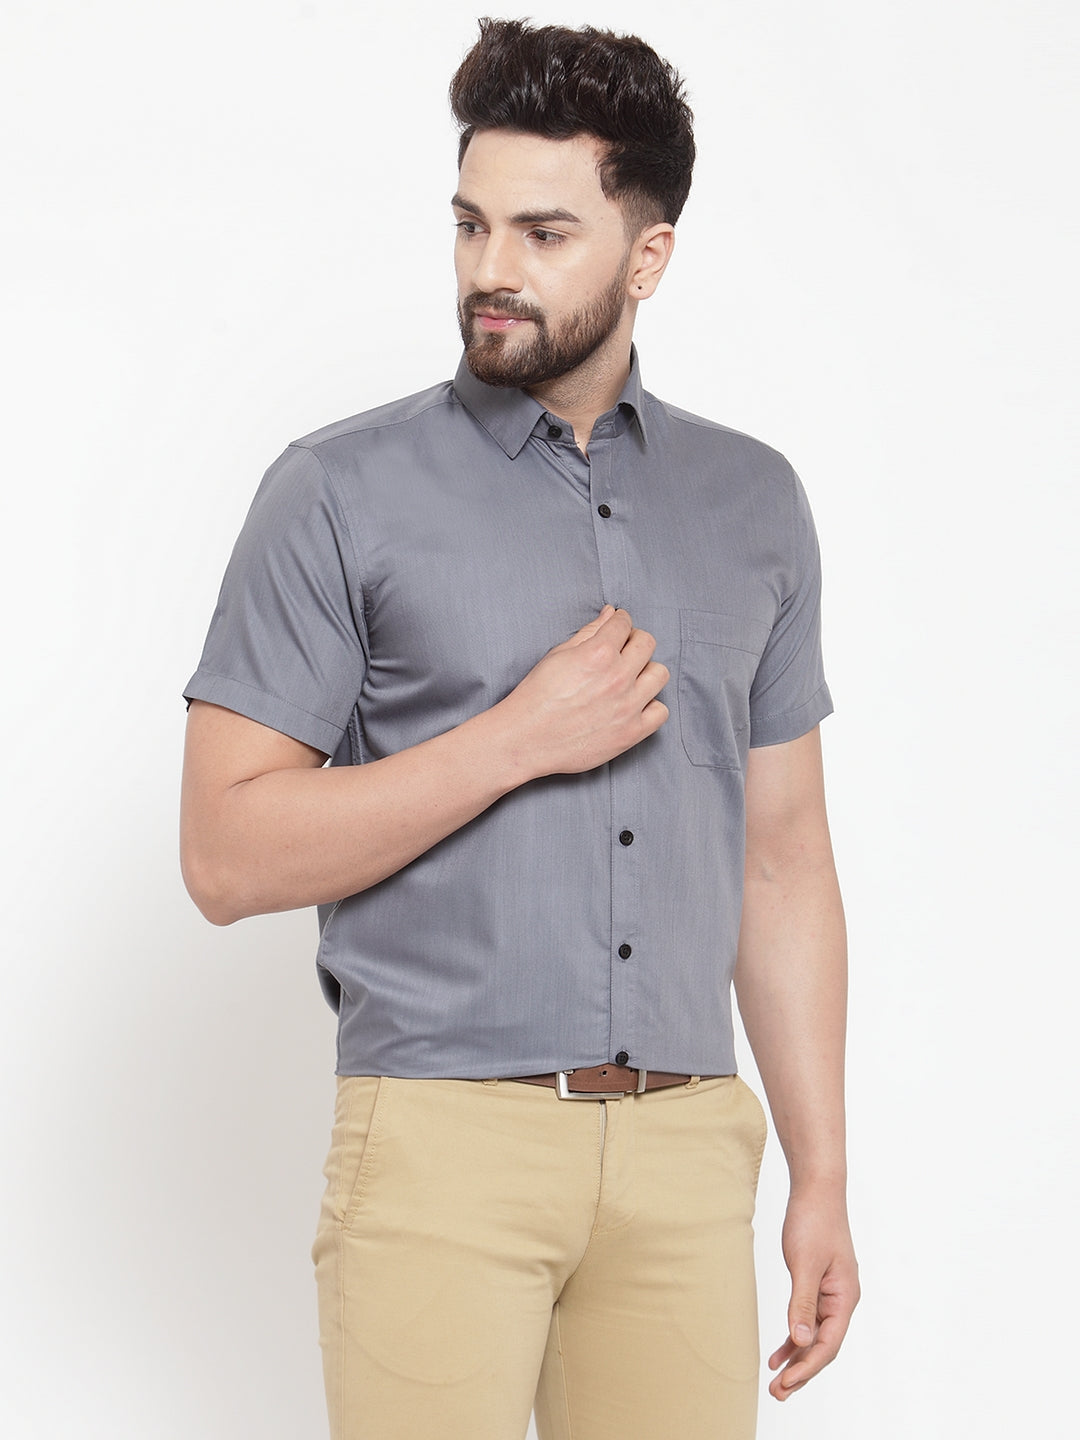 Men's Grey Cotton Half Sleeves Solid Formal Shirts ( SF 754Grey ) - Jainish